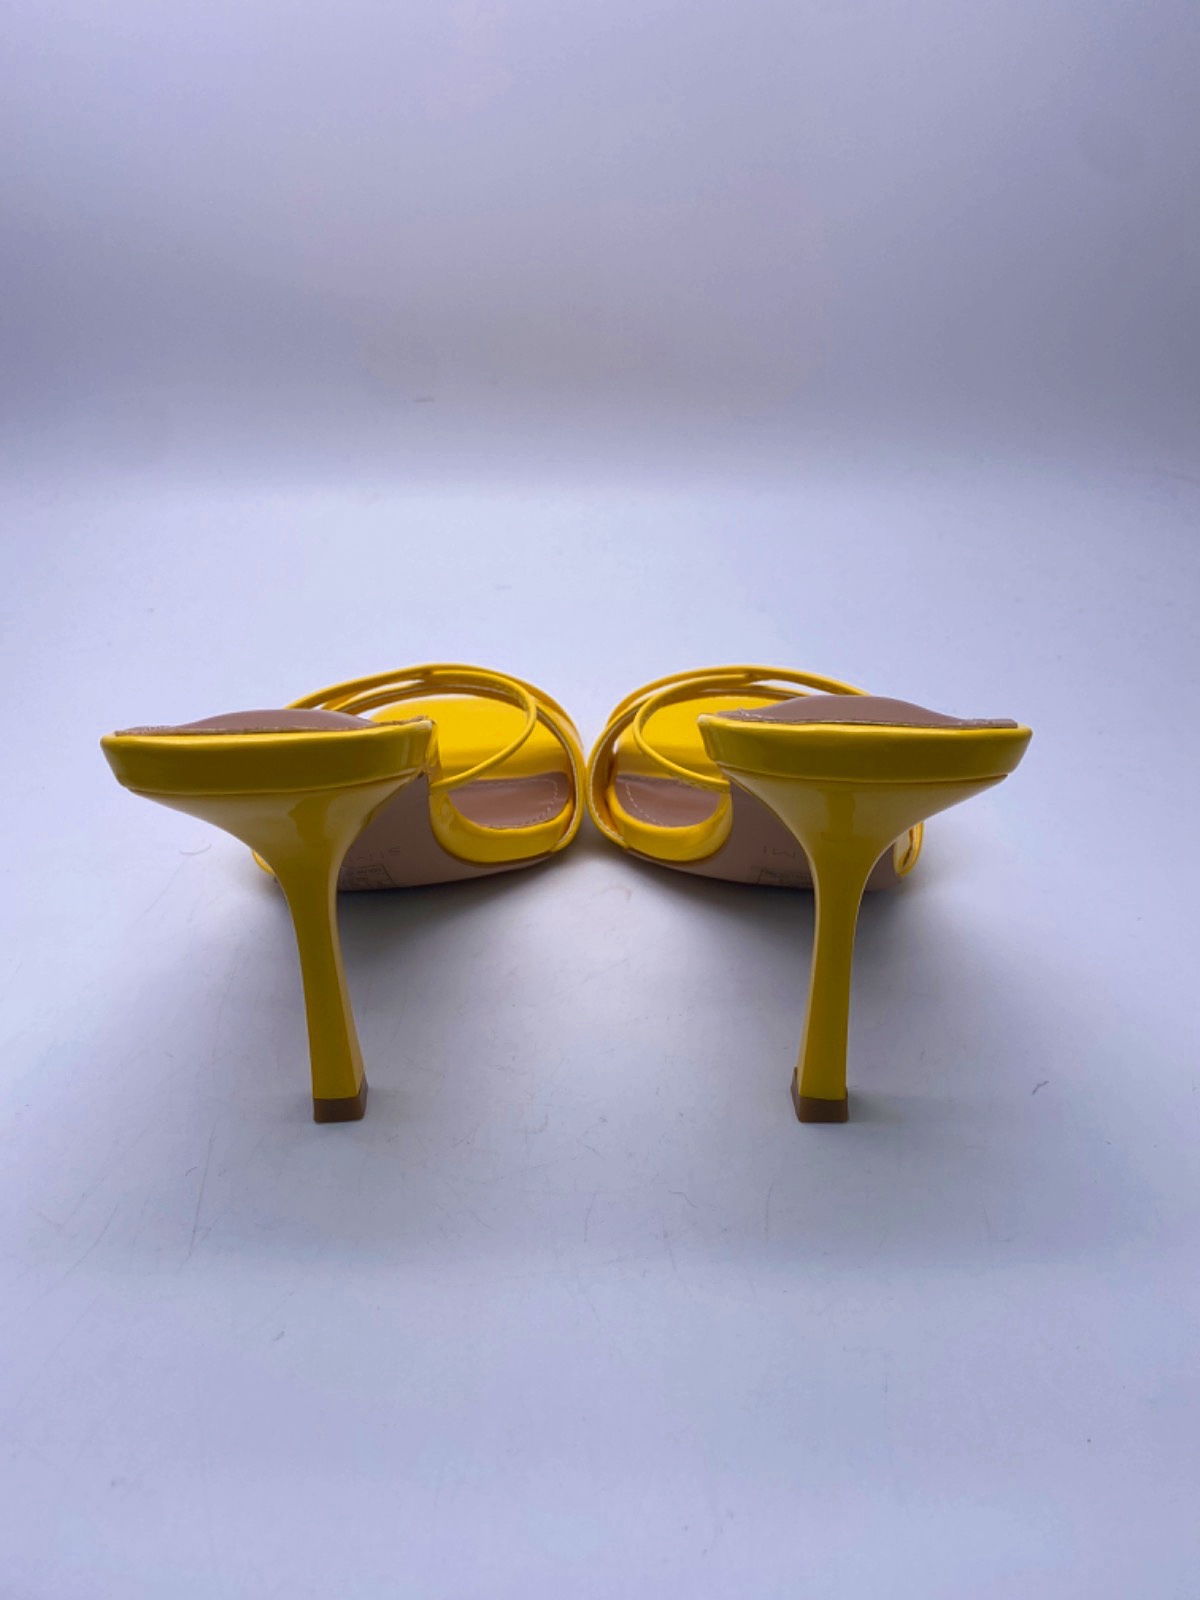 Simmi Yellow Patent Macy-3 Danique Heels UK 5